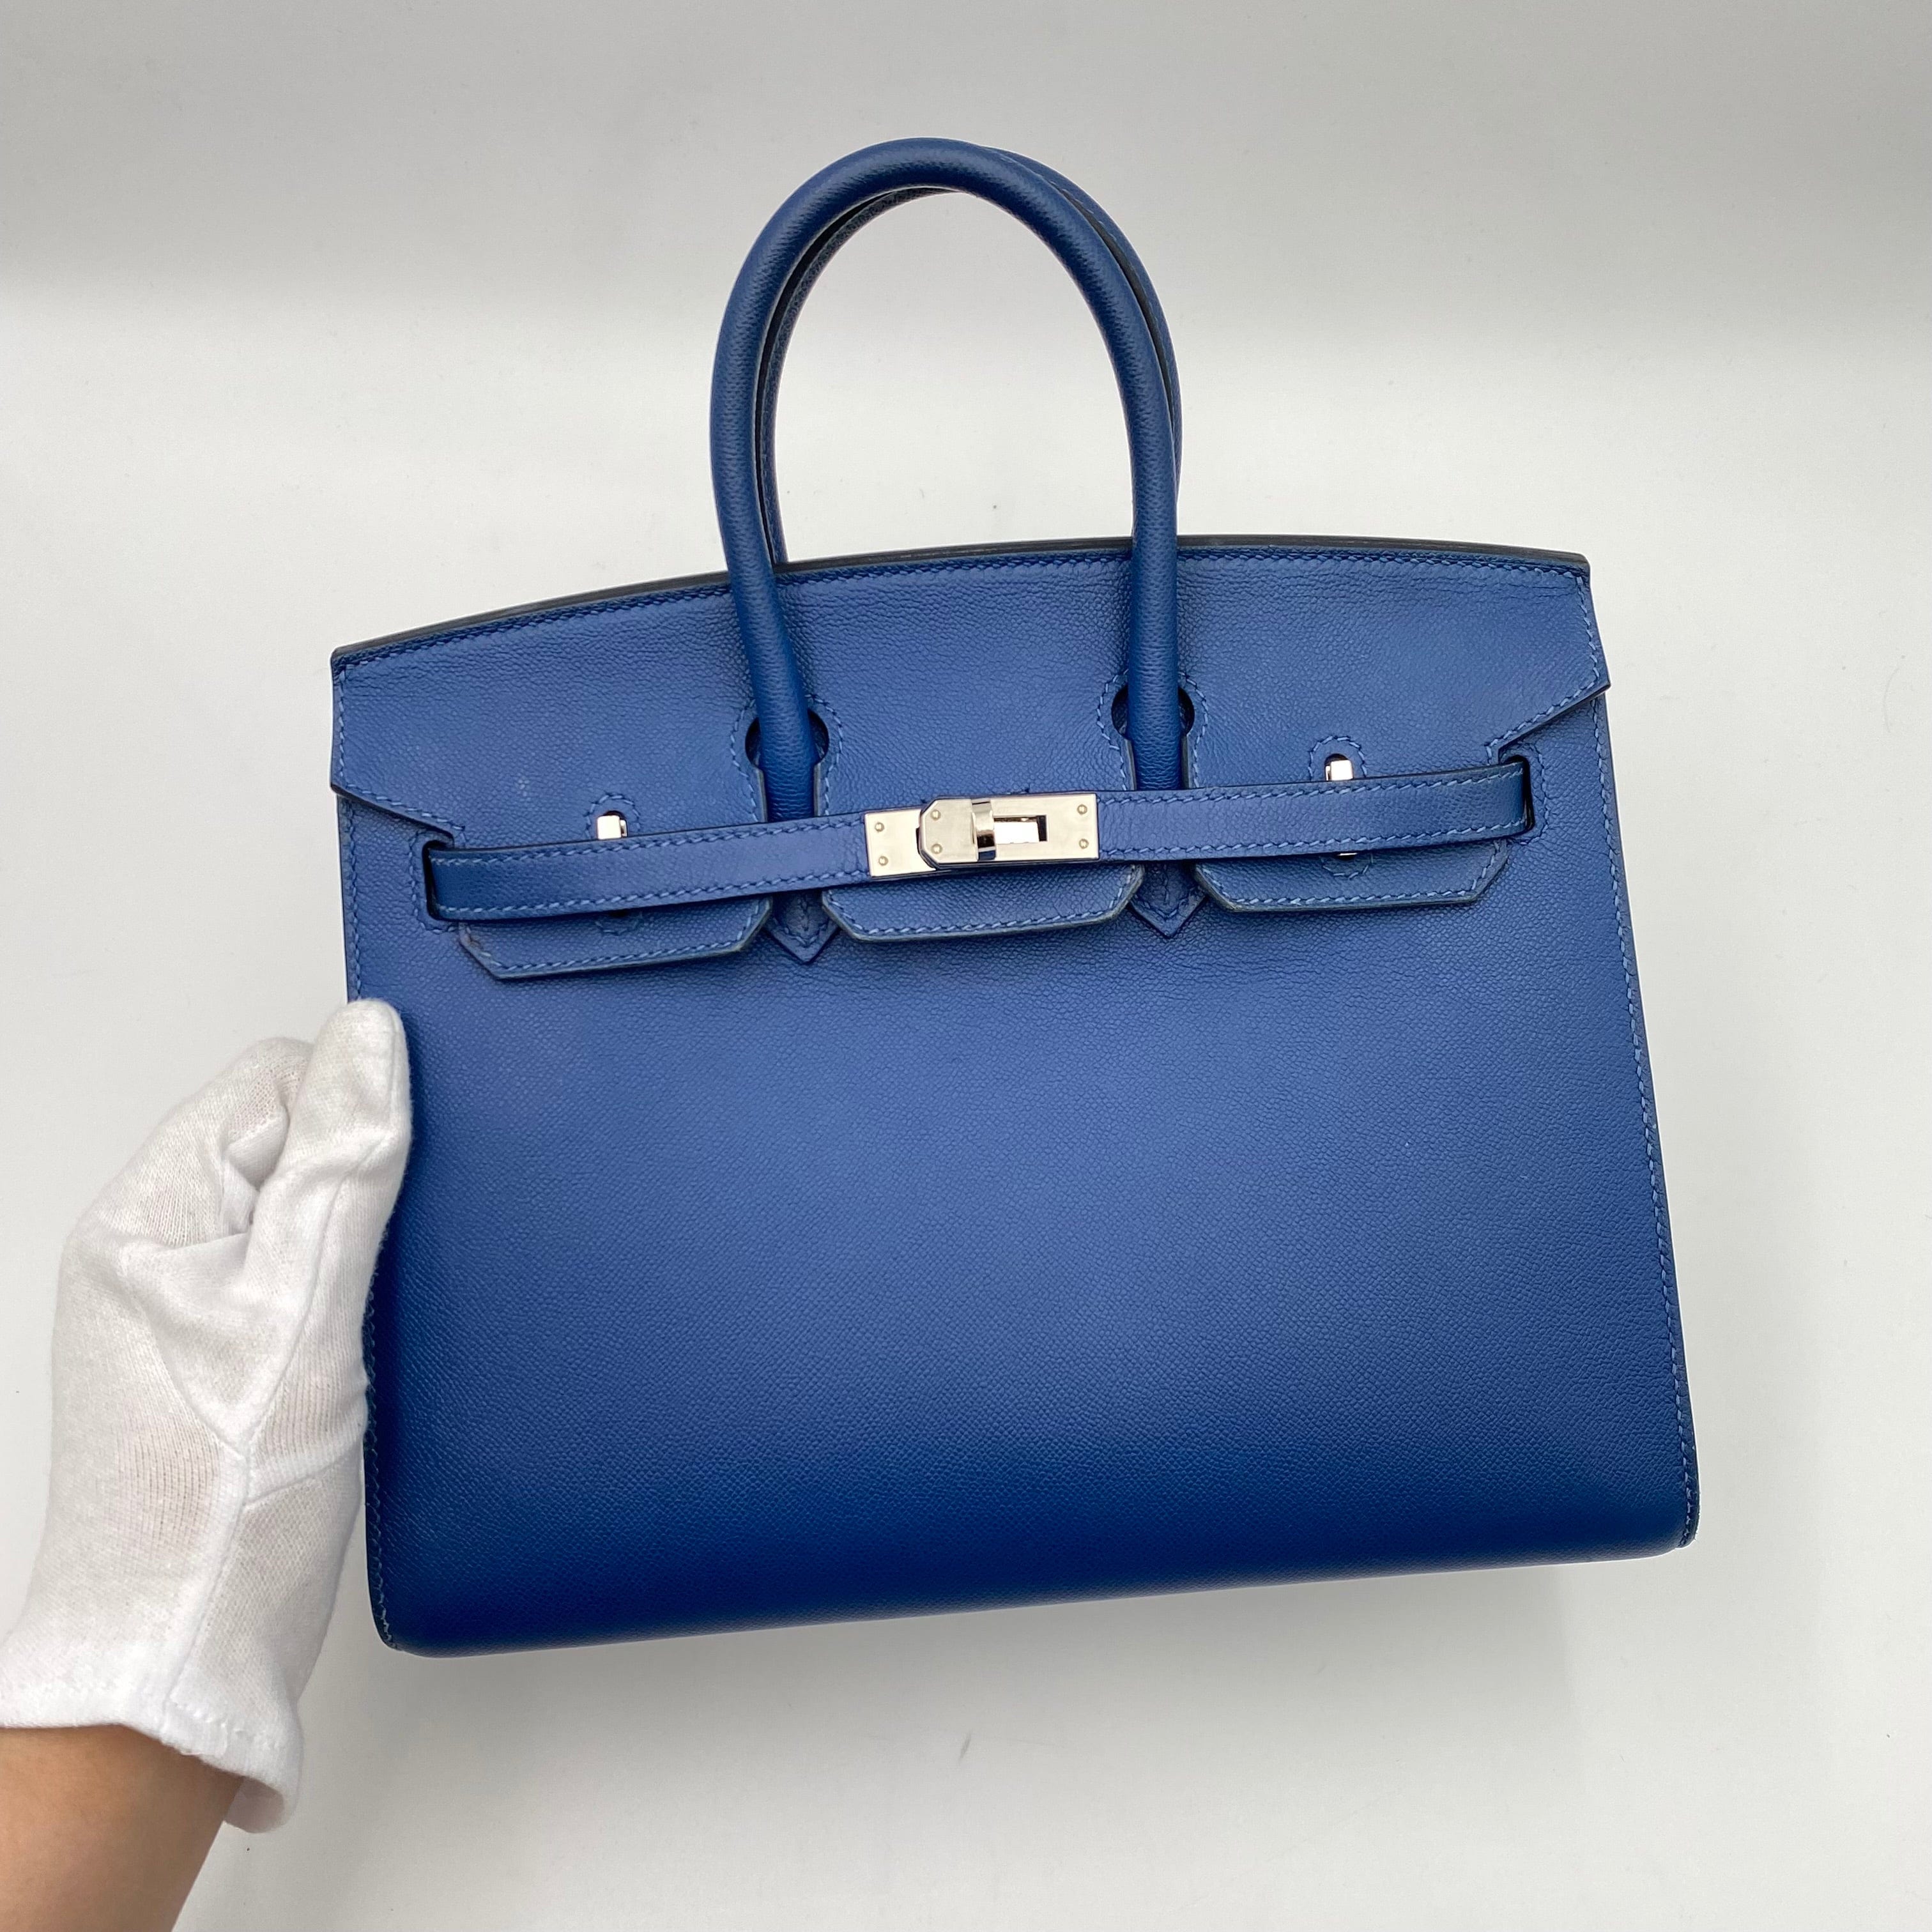 Hermès HERMES BIRKIN SELLIER 25 BLUE TYPE MADAME HAND BAG Z SHW 90225277